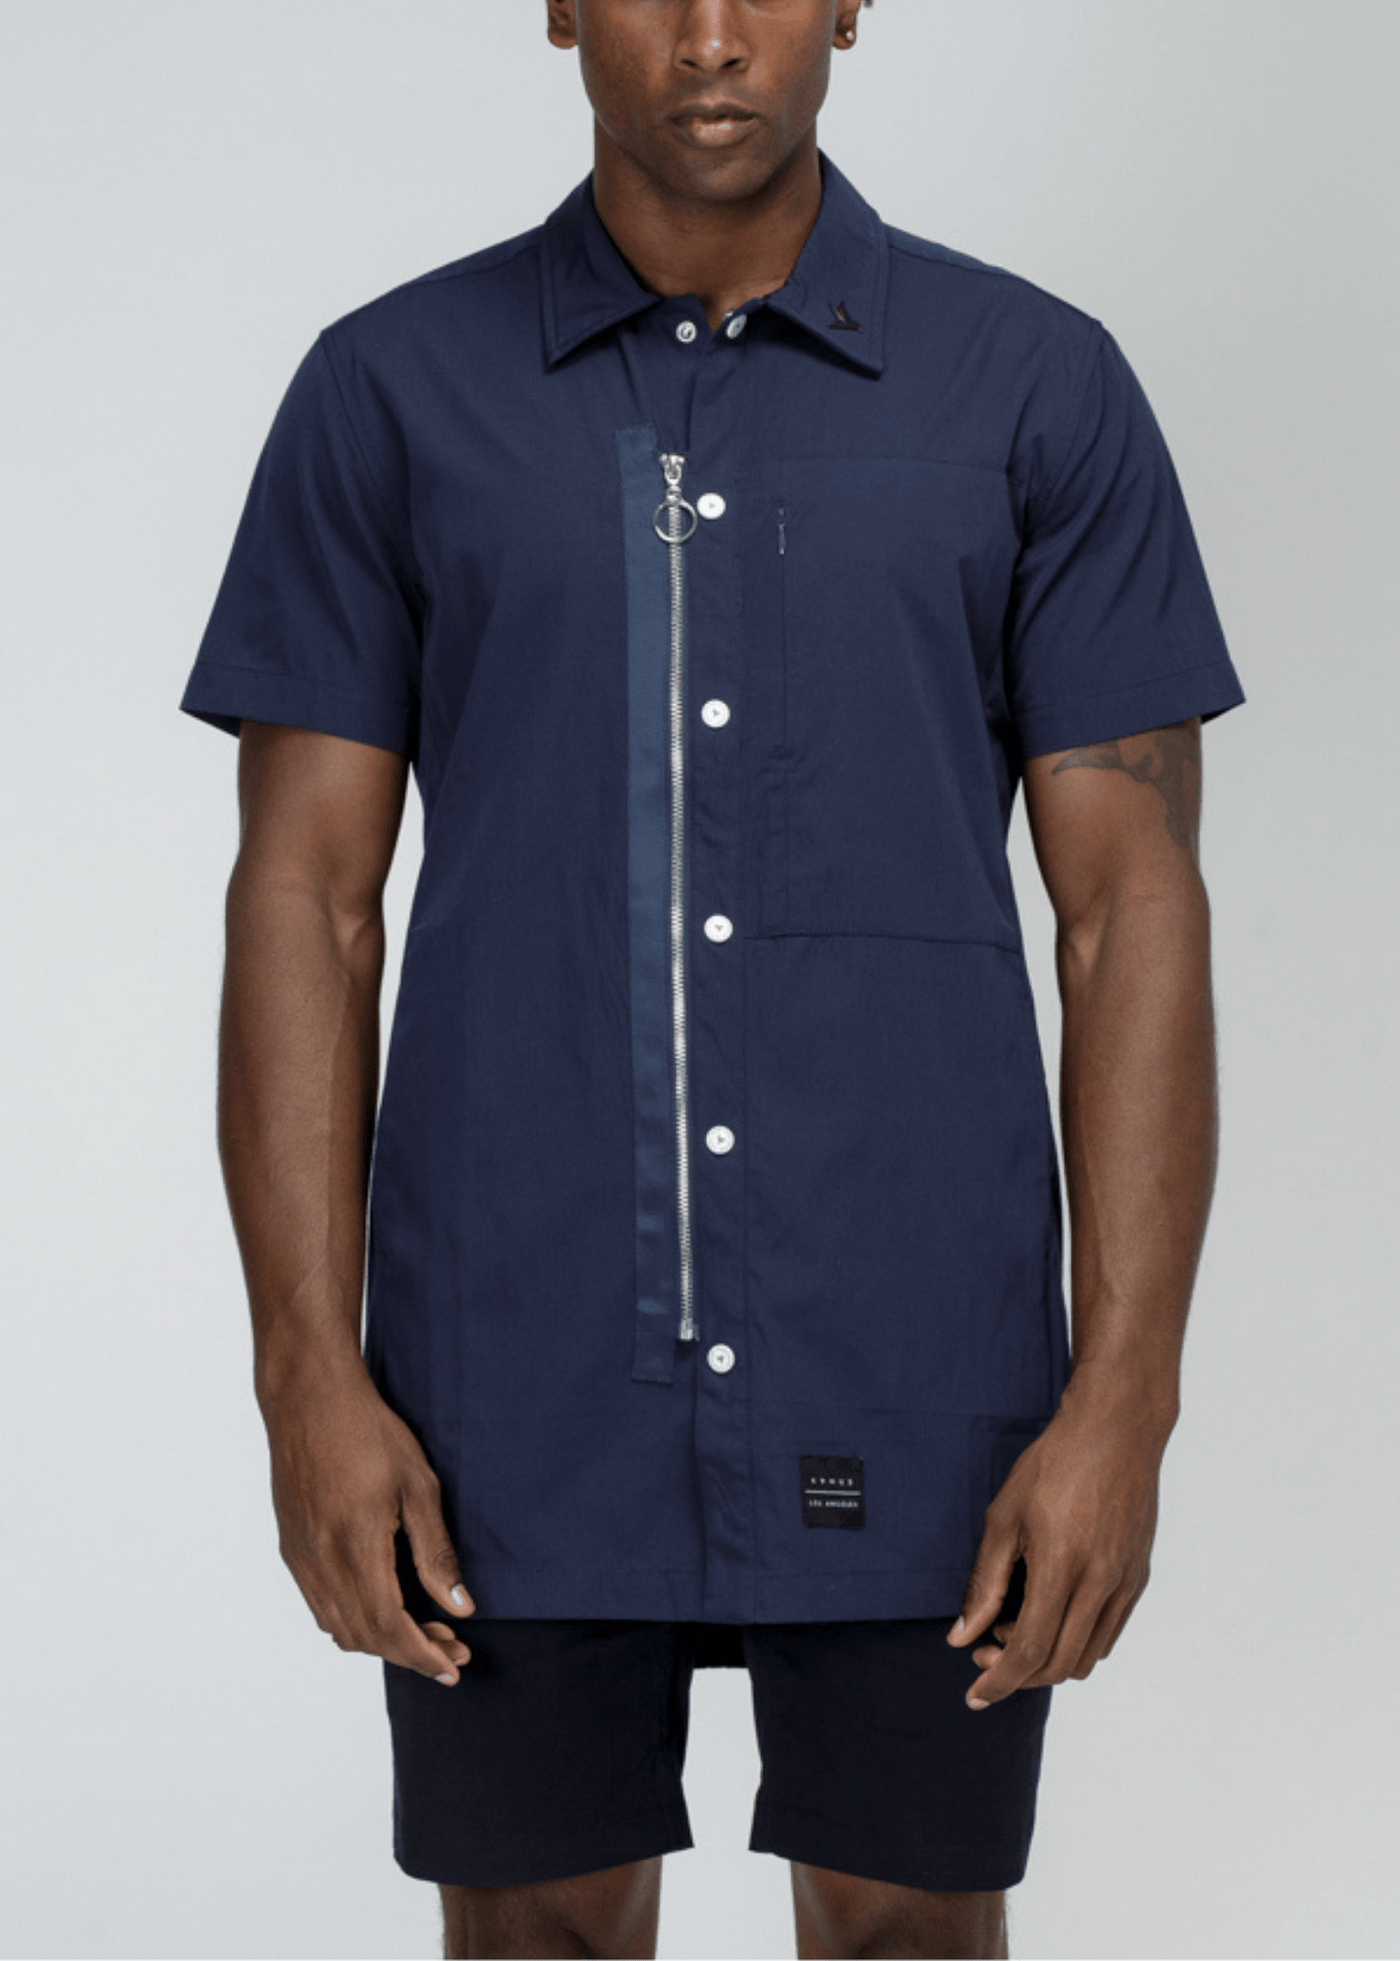 Konus Men's Collared Button Up/Zip Up Shirt in Navy by Shop at Konus